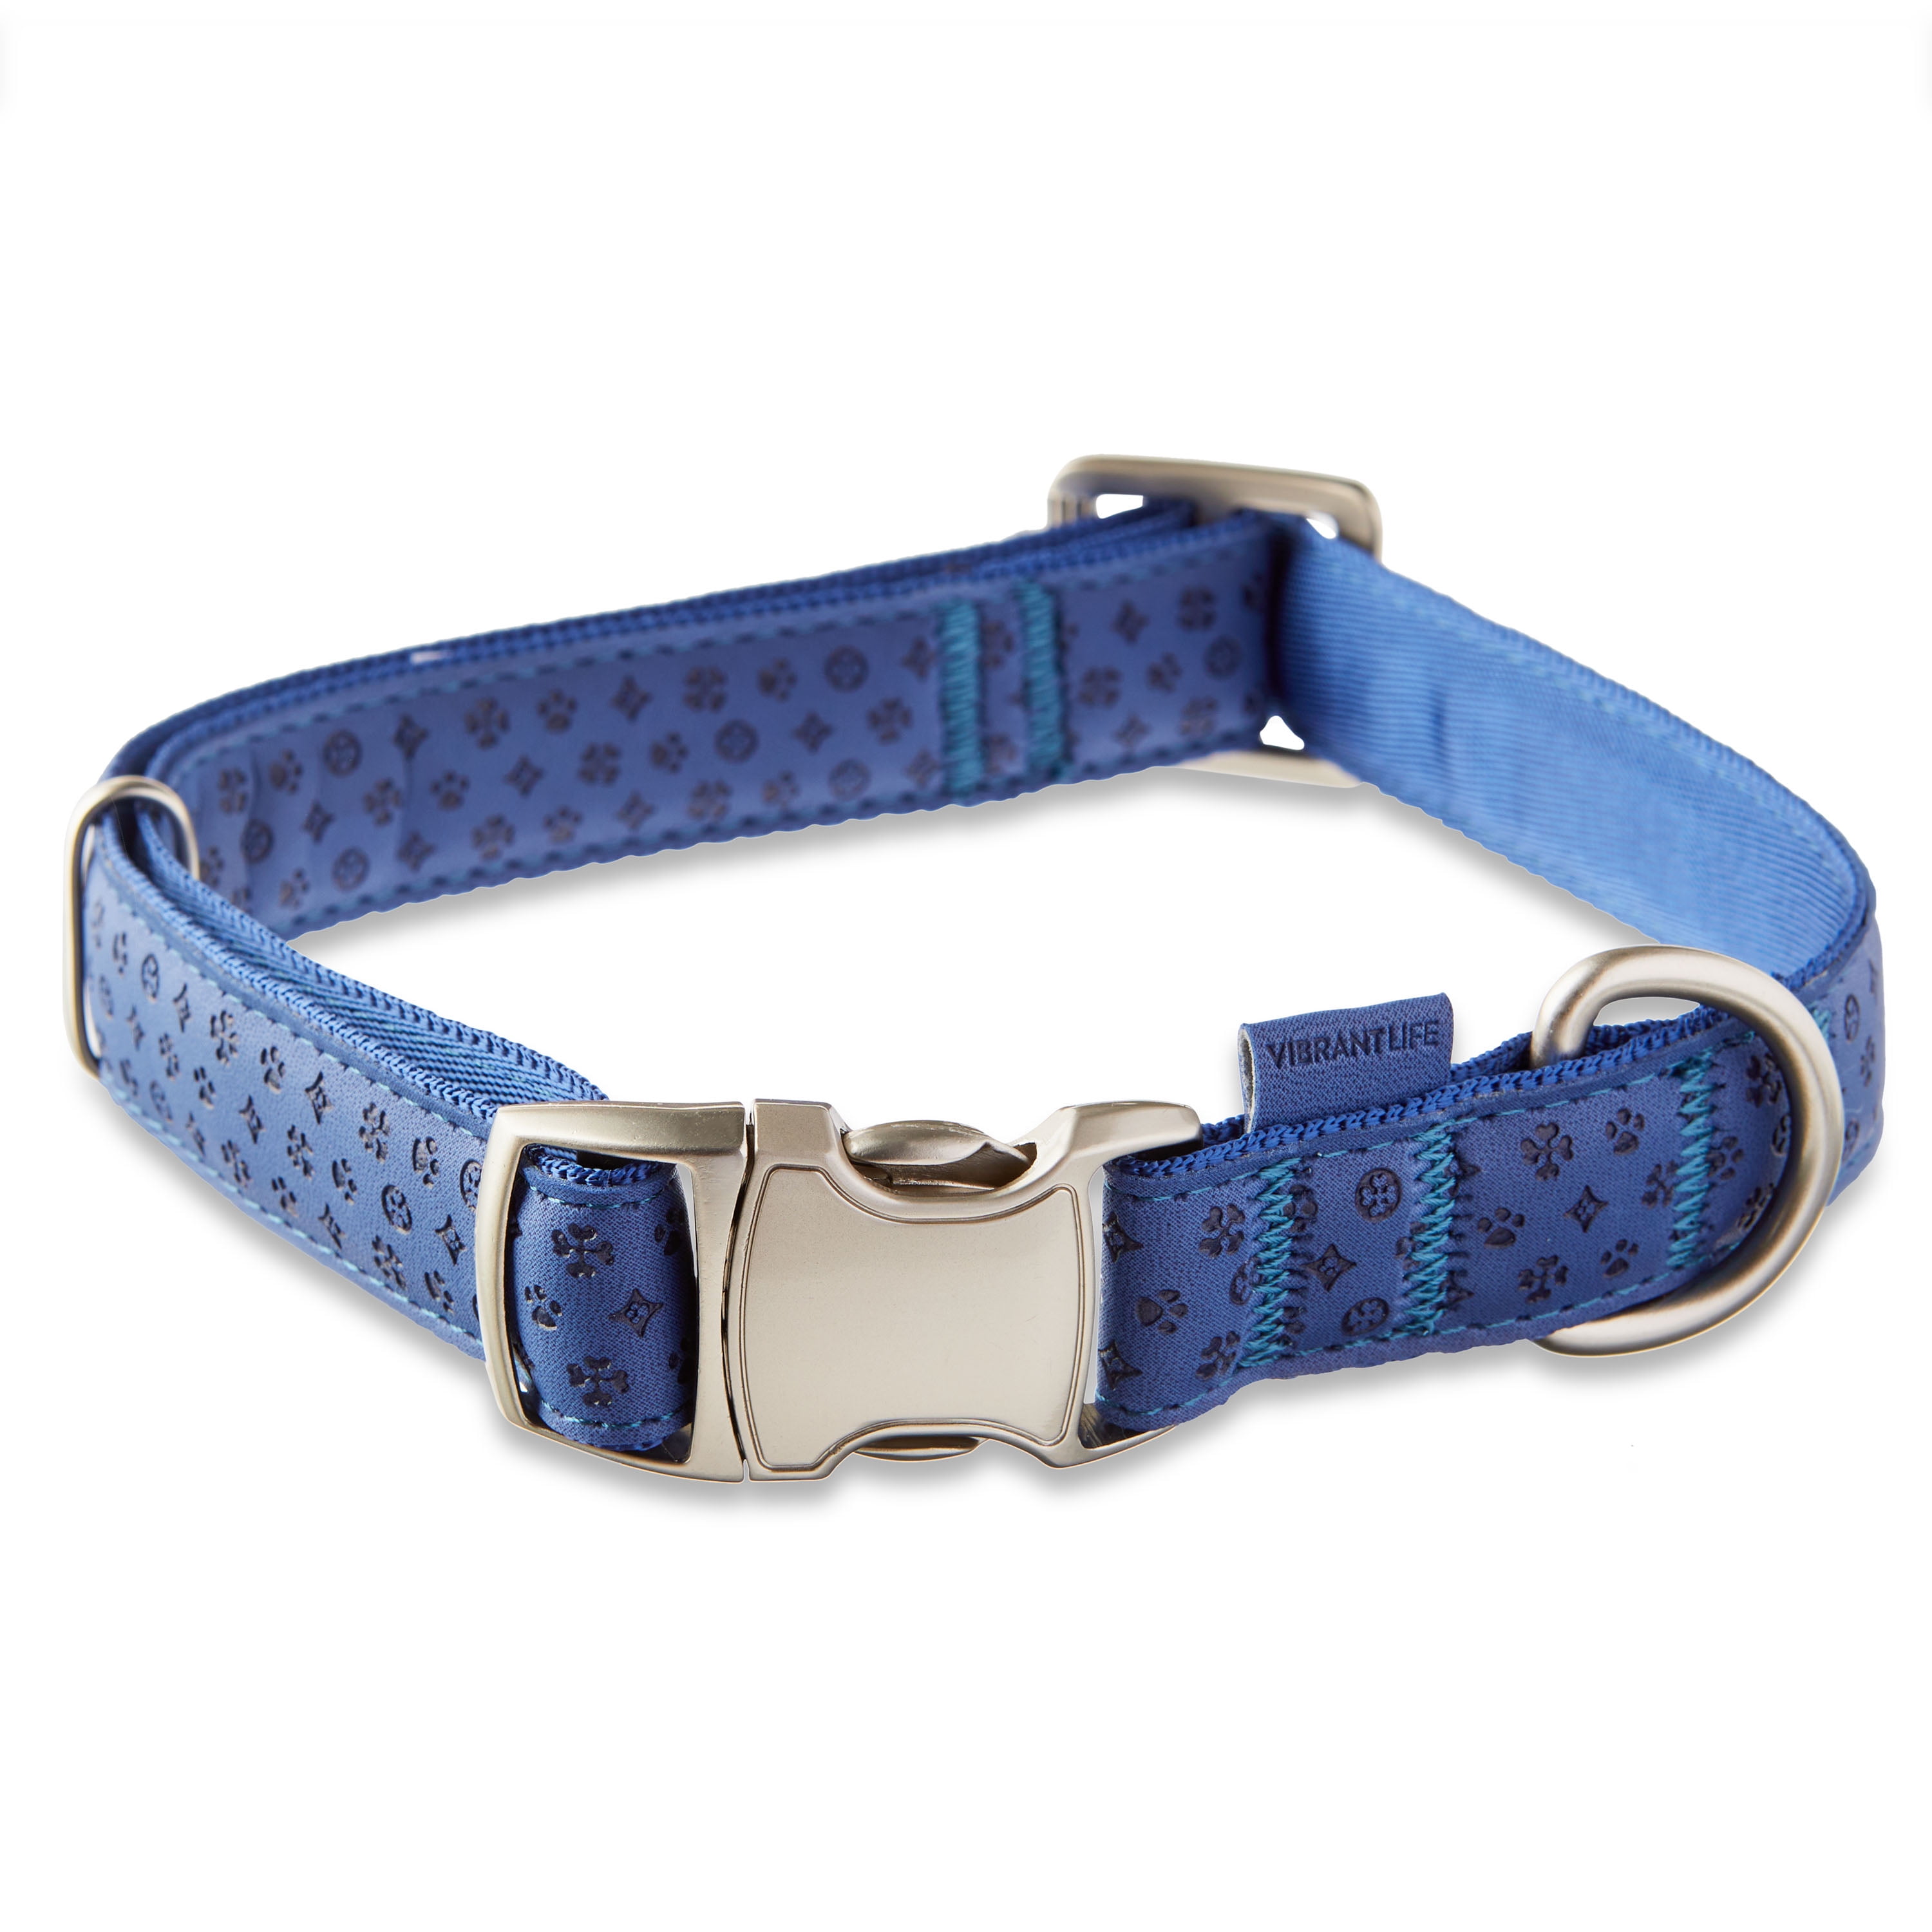 Vibrant Life Embossed Adjustable Dog Collar, Navy Blue, L